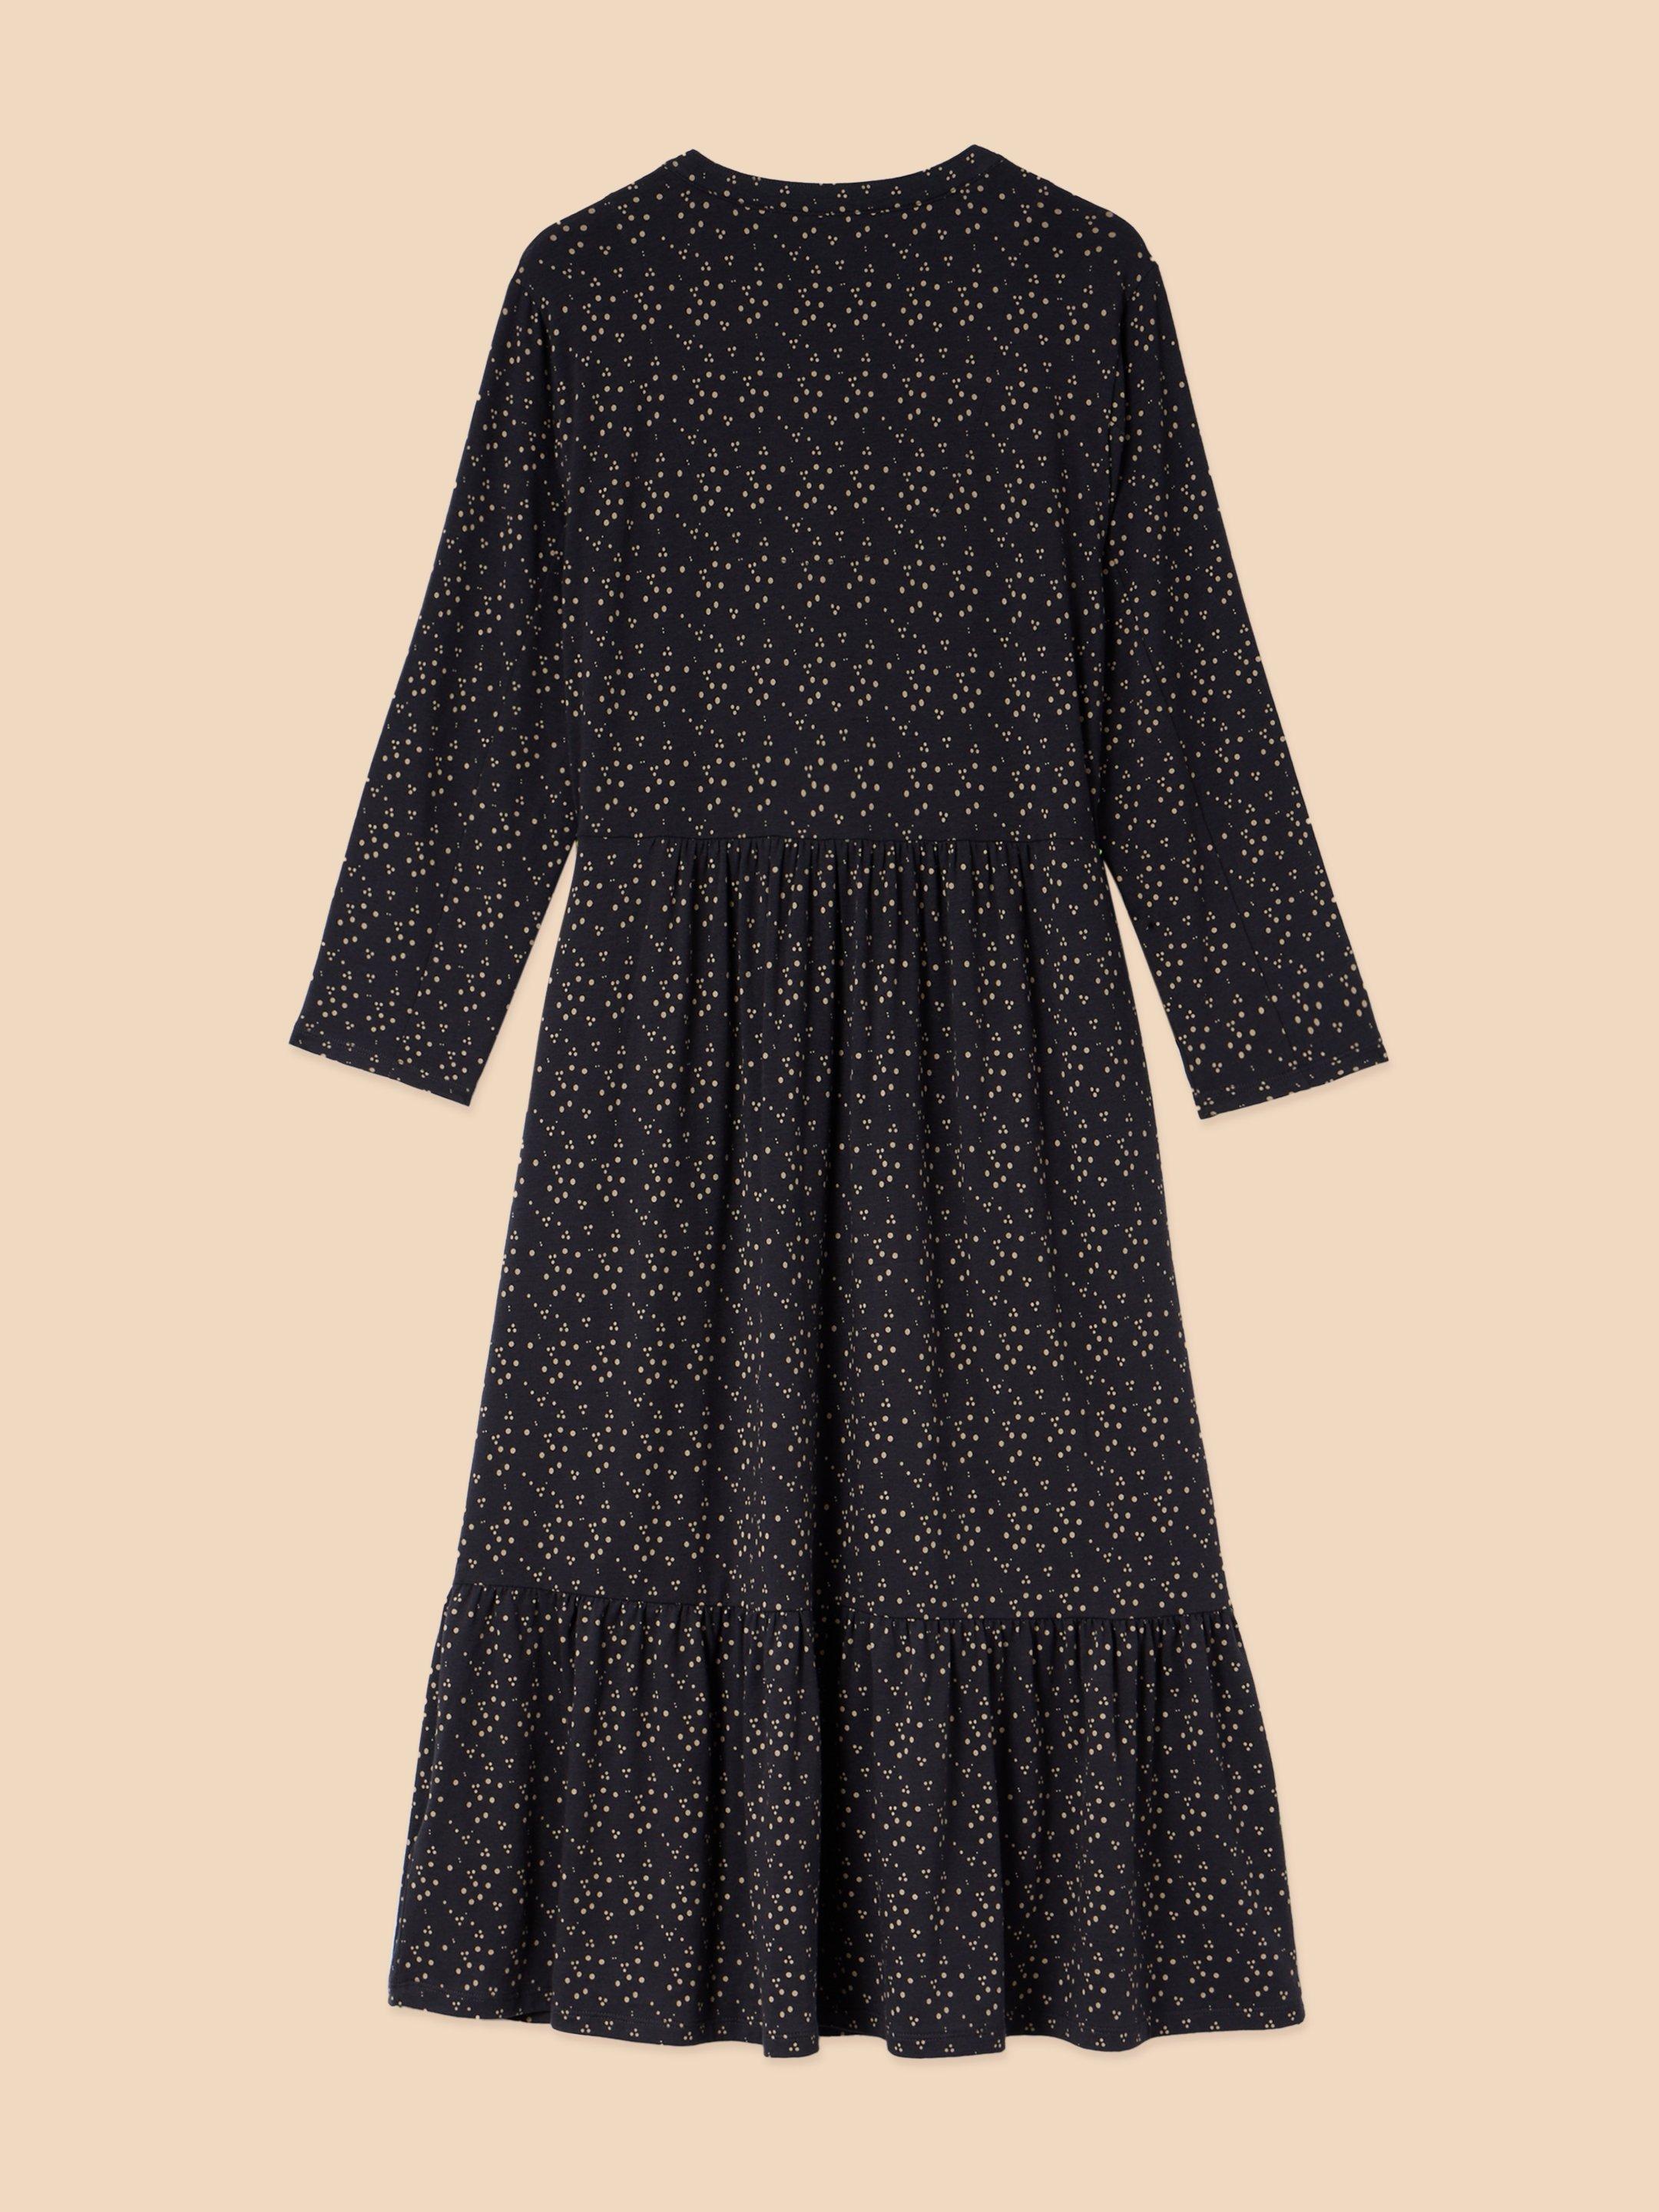 Naya Printed Jersey Dress in BLK MLT - FLAT BACK